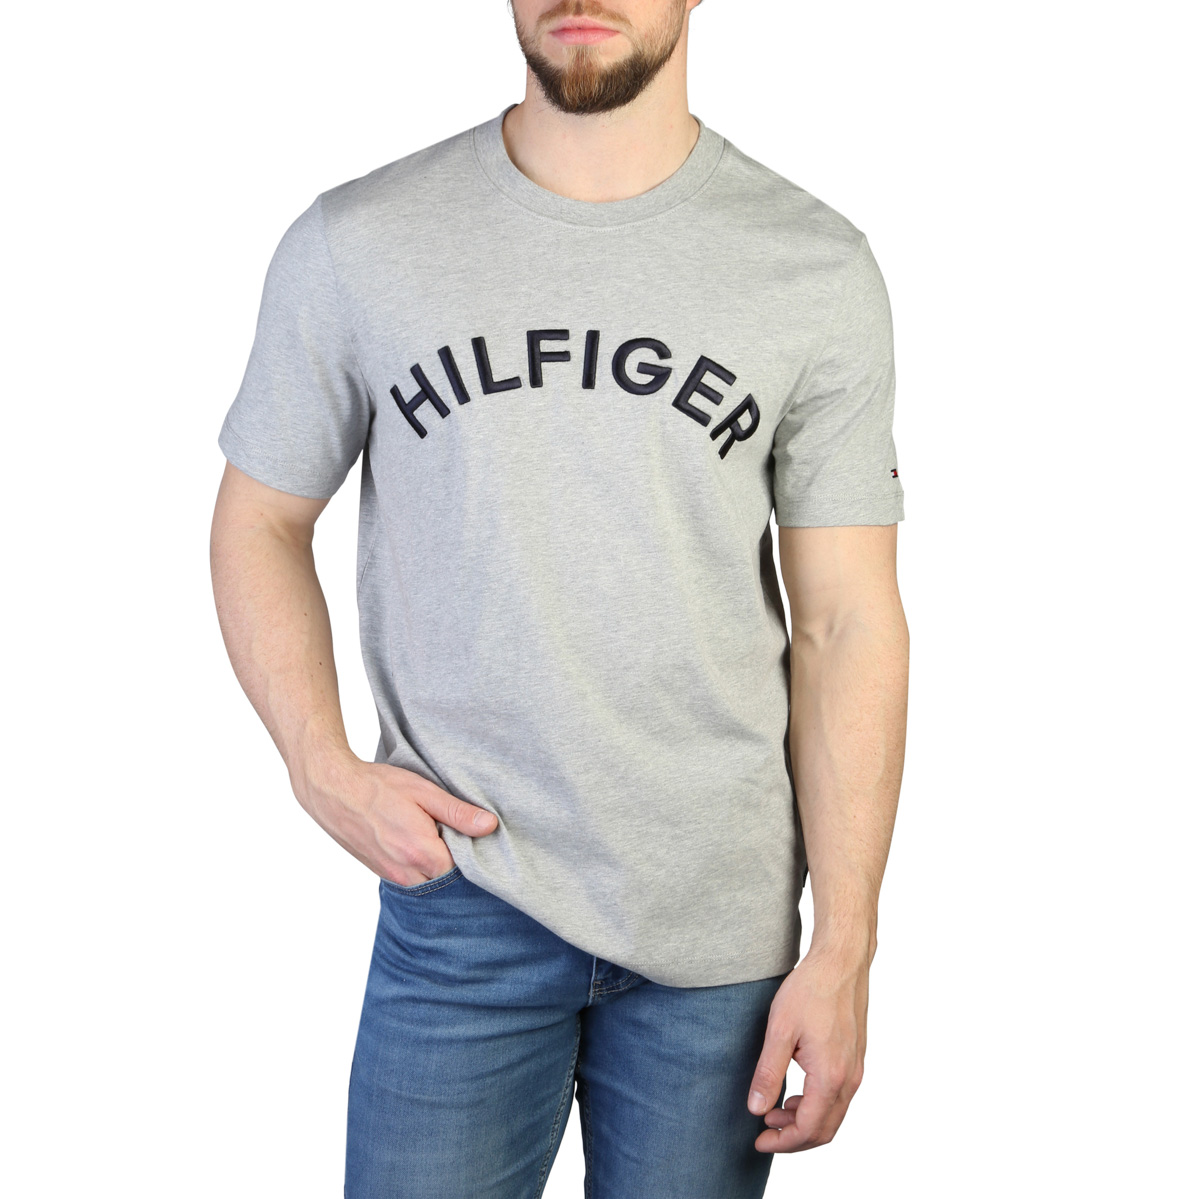 Tommy Hilfiger - T-shirt homme